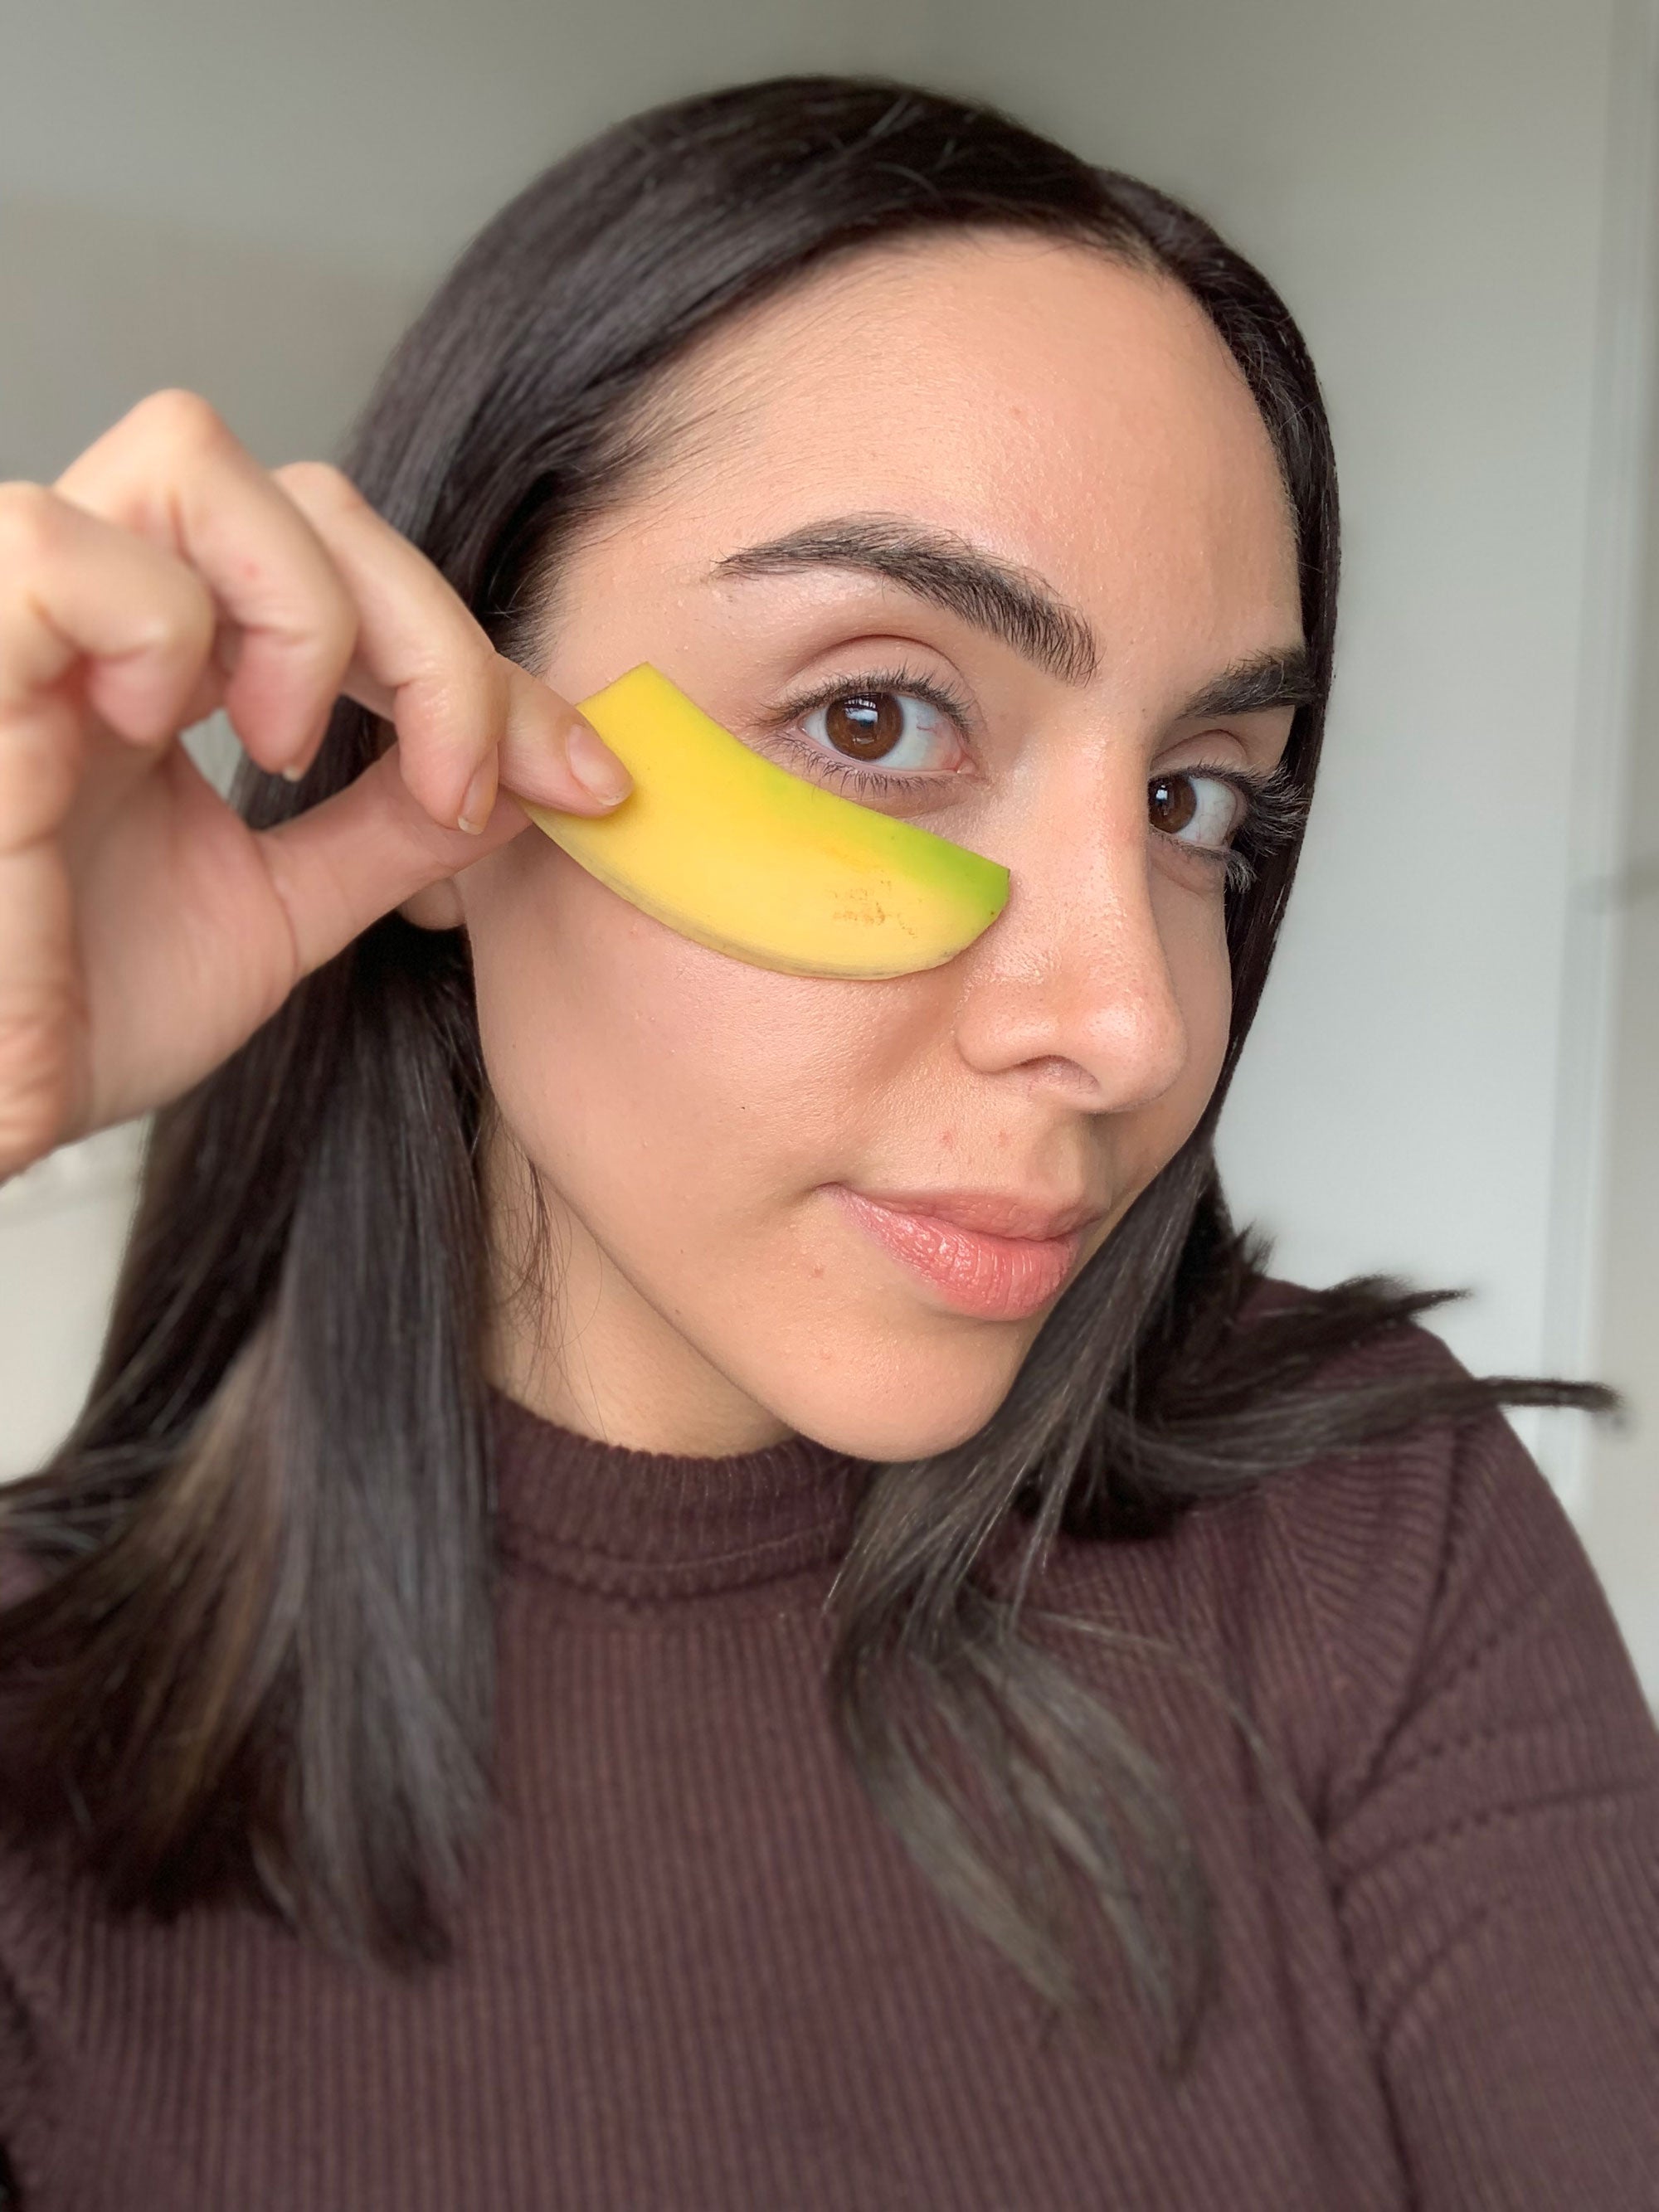 Beauty Hacks: Can banana skins really lighten dark under-eye bags?